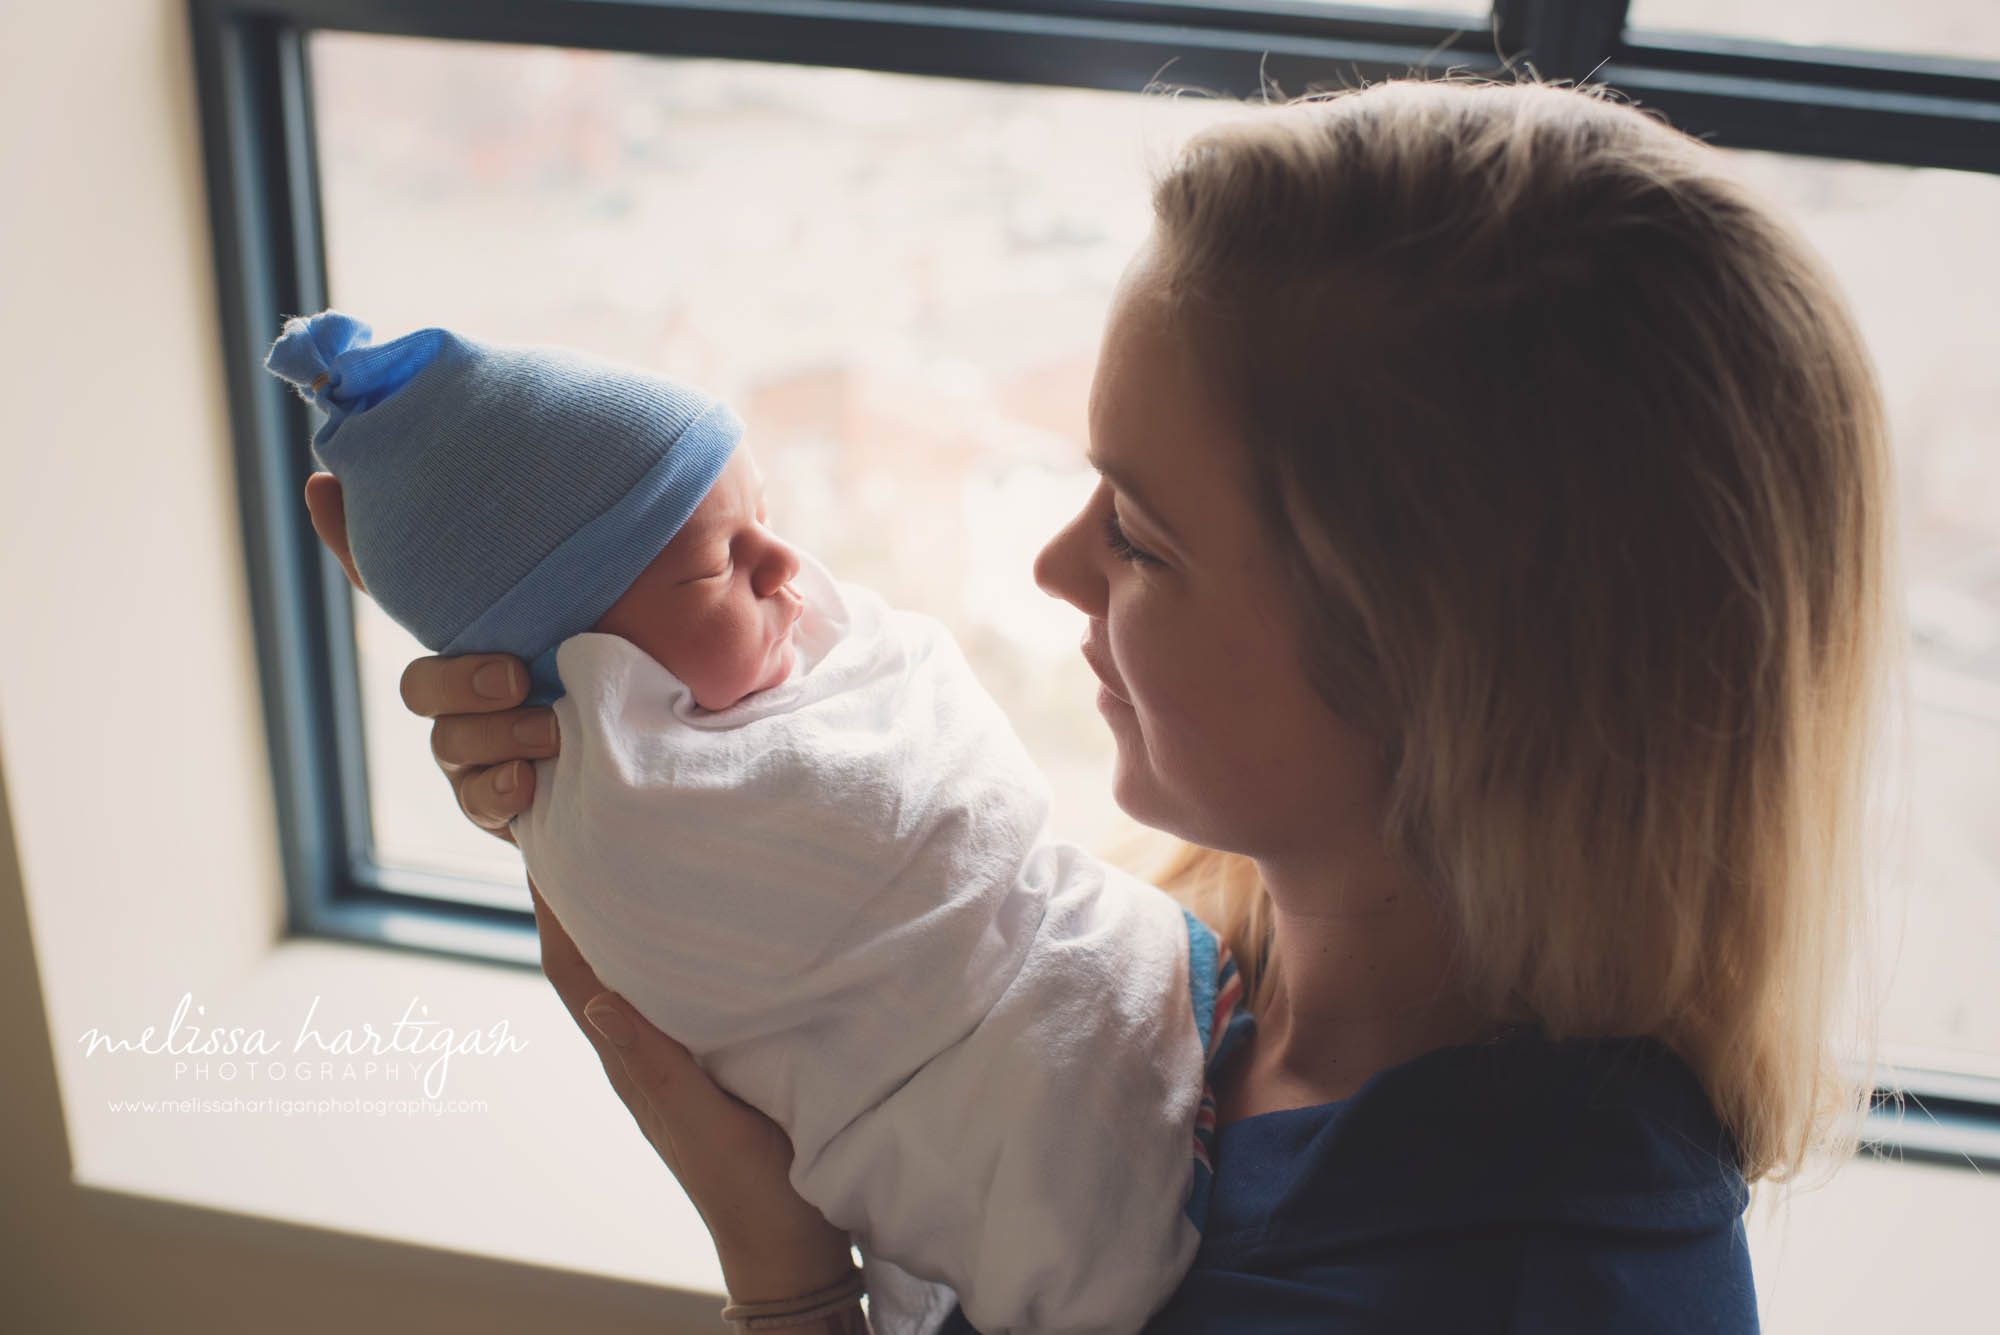 mom holding her newborn baby boy in hospital room by hospital window